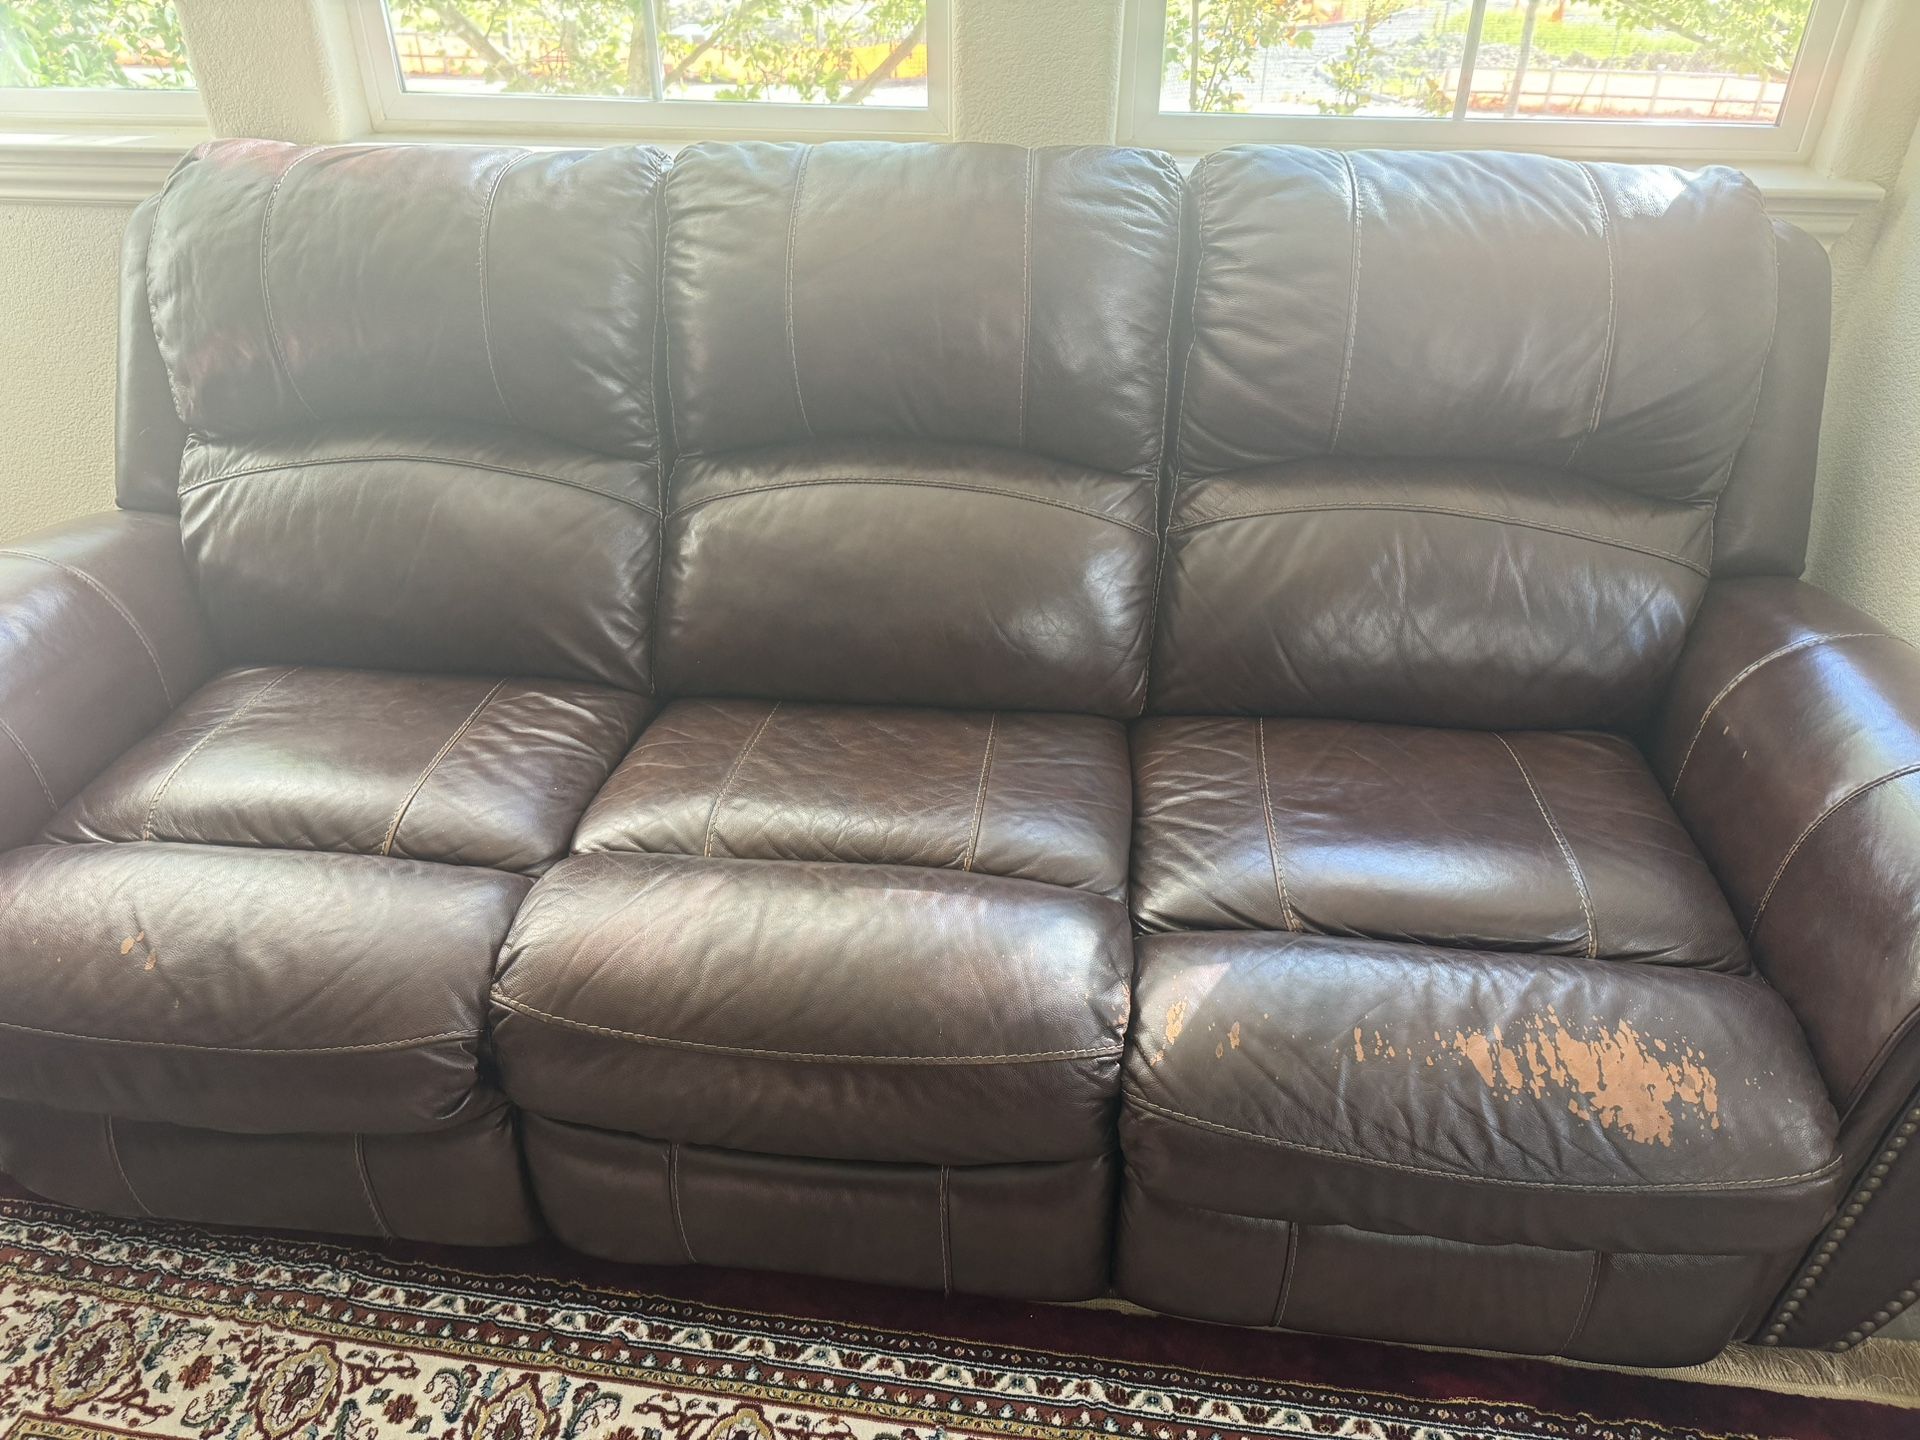 Three Leather Sofa